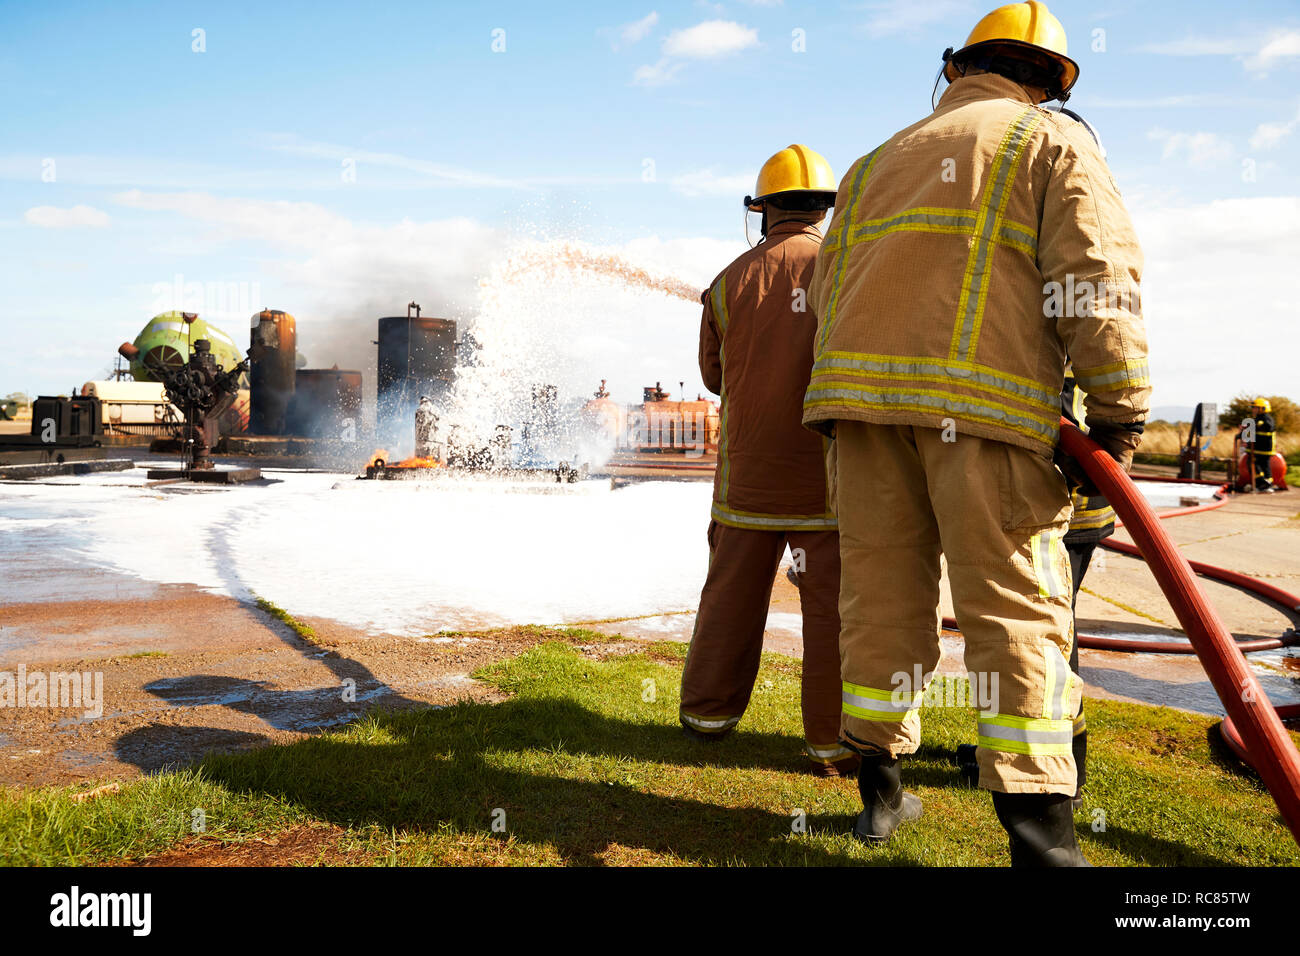 Firemen training, team of firemen spraying firefighting foam at training facility Stock Photo